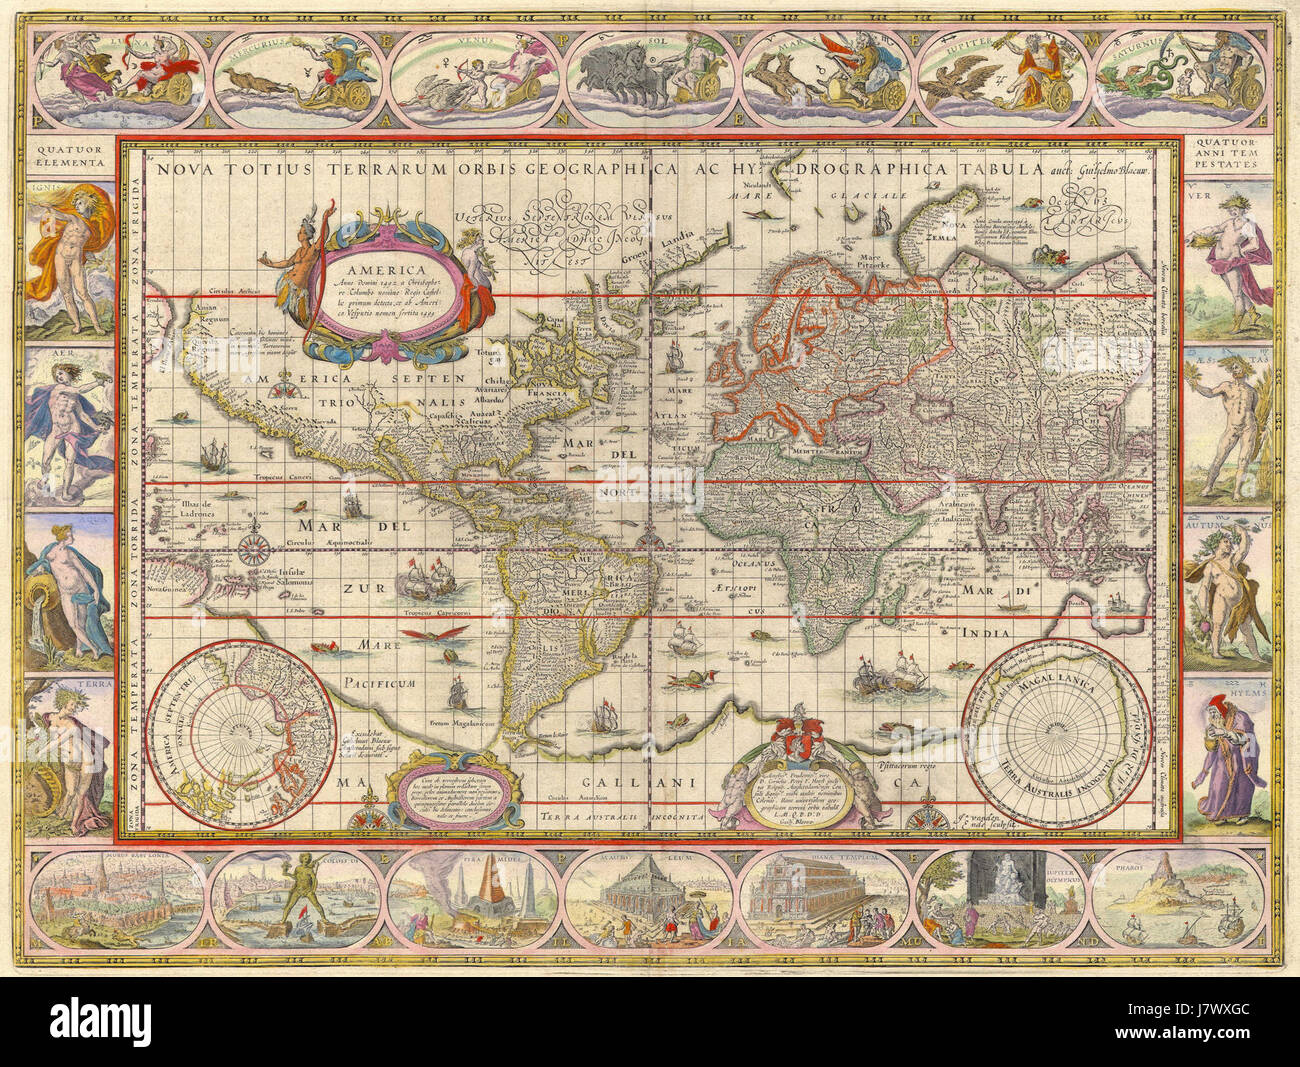 20101208105459! Willem Blaeu Nova Totius Terrarum Orbis Geographica Ac Hydrographica tabula Stockfoto